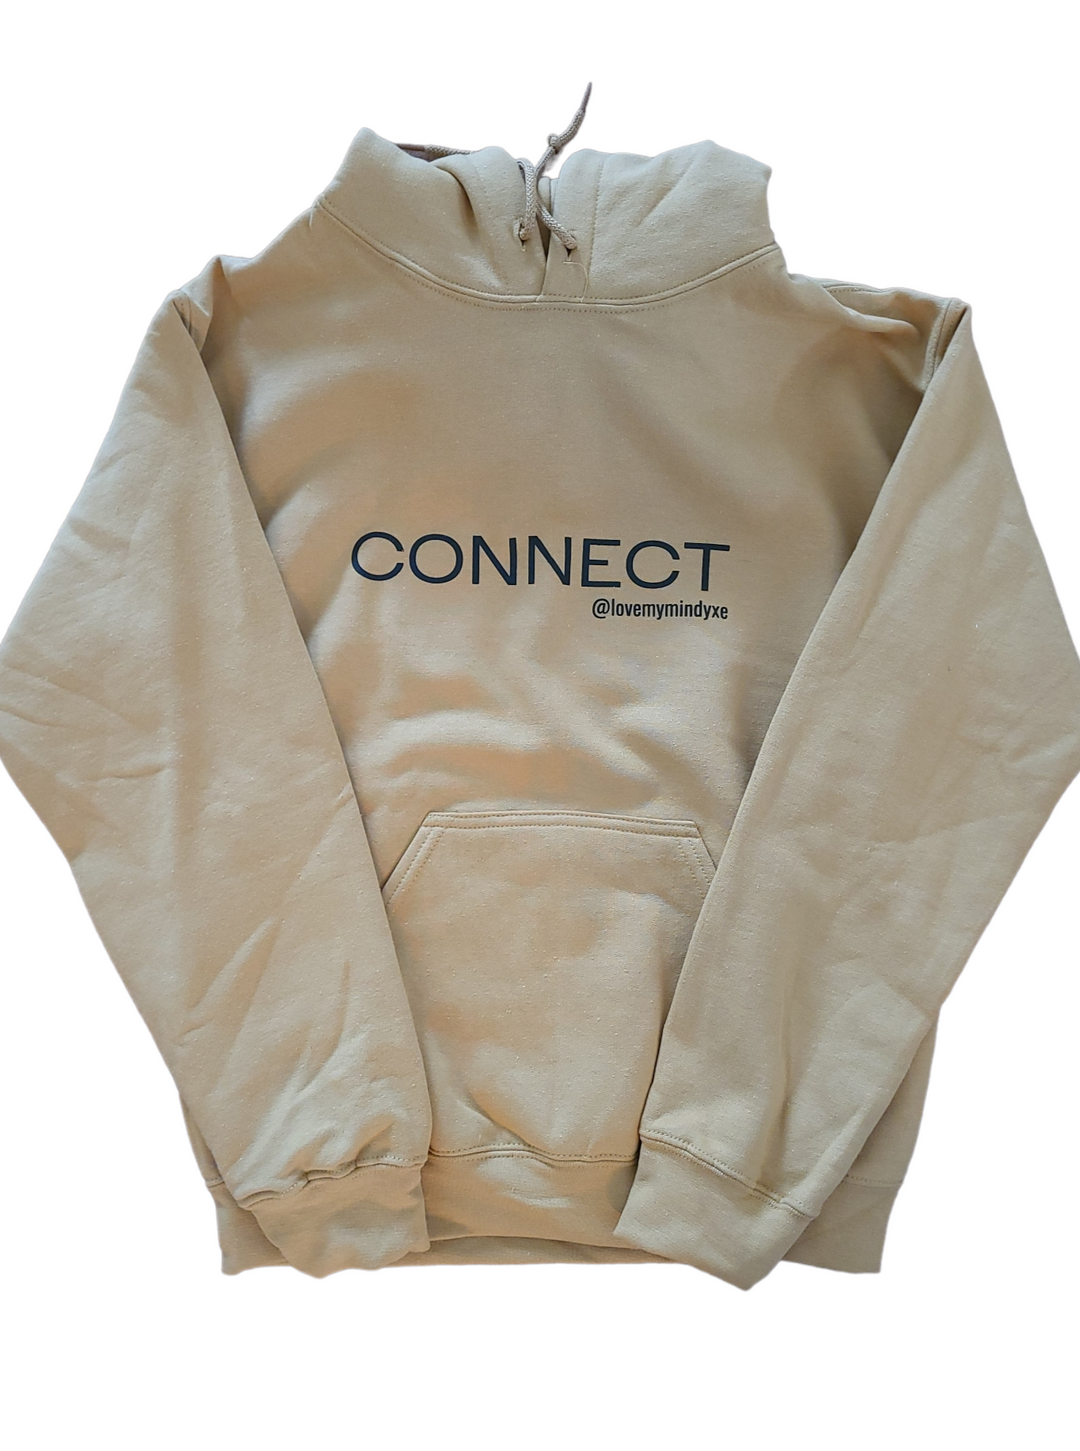 Hooded Sweatshirt - CONNECT @lovemymindxye - Old Gold with Black